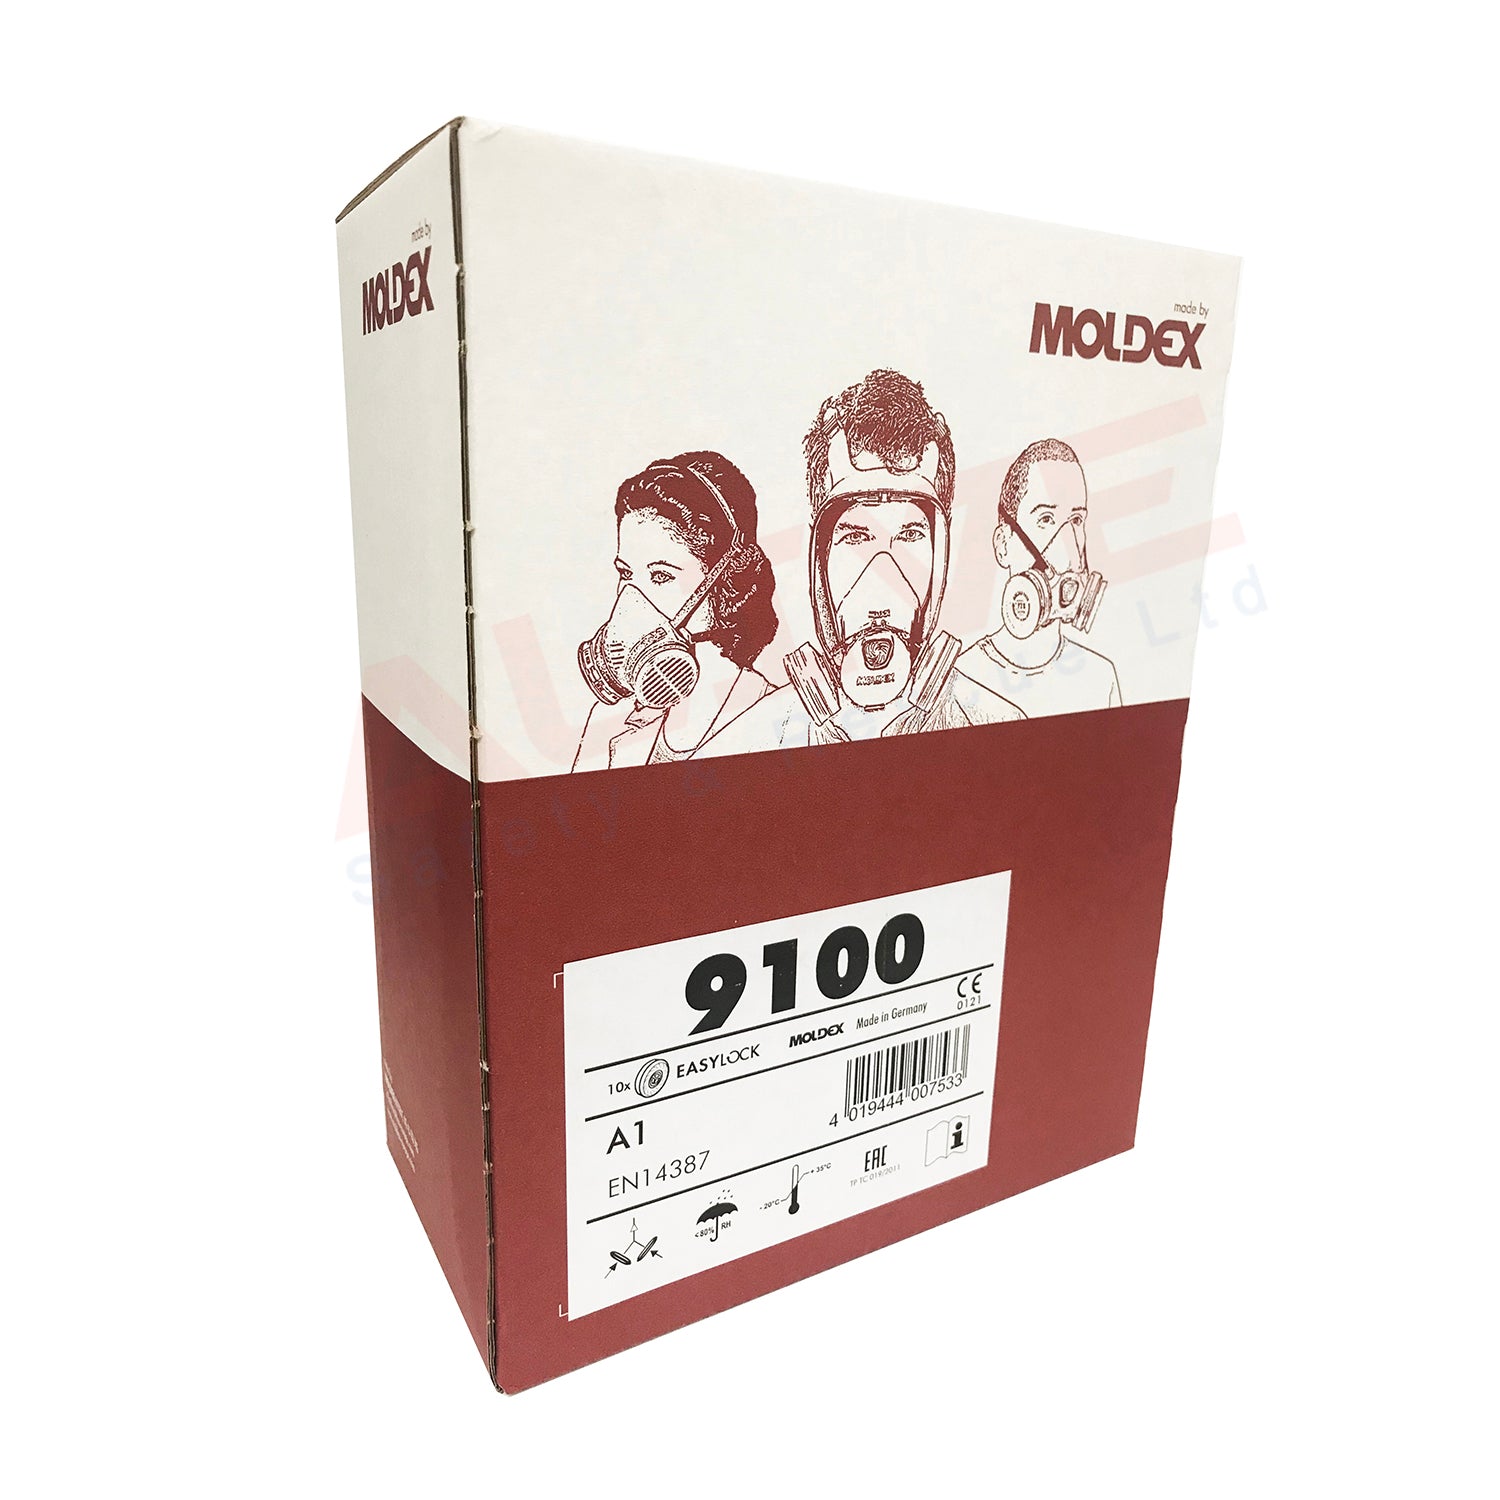 Moldex 9100 A1 Easylock Gas Filters Box